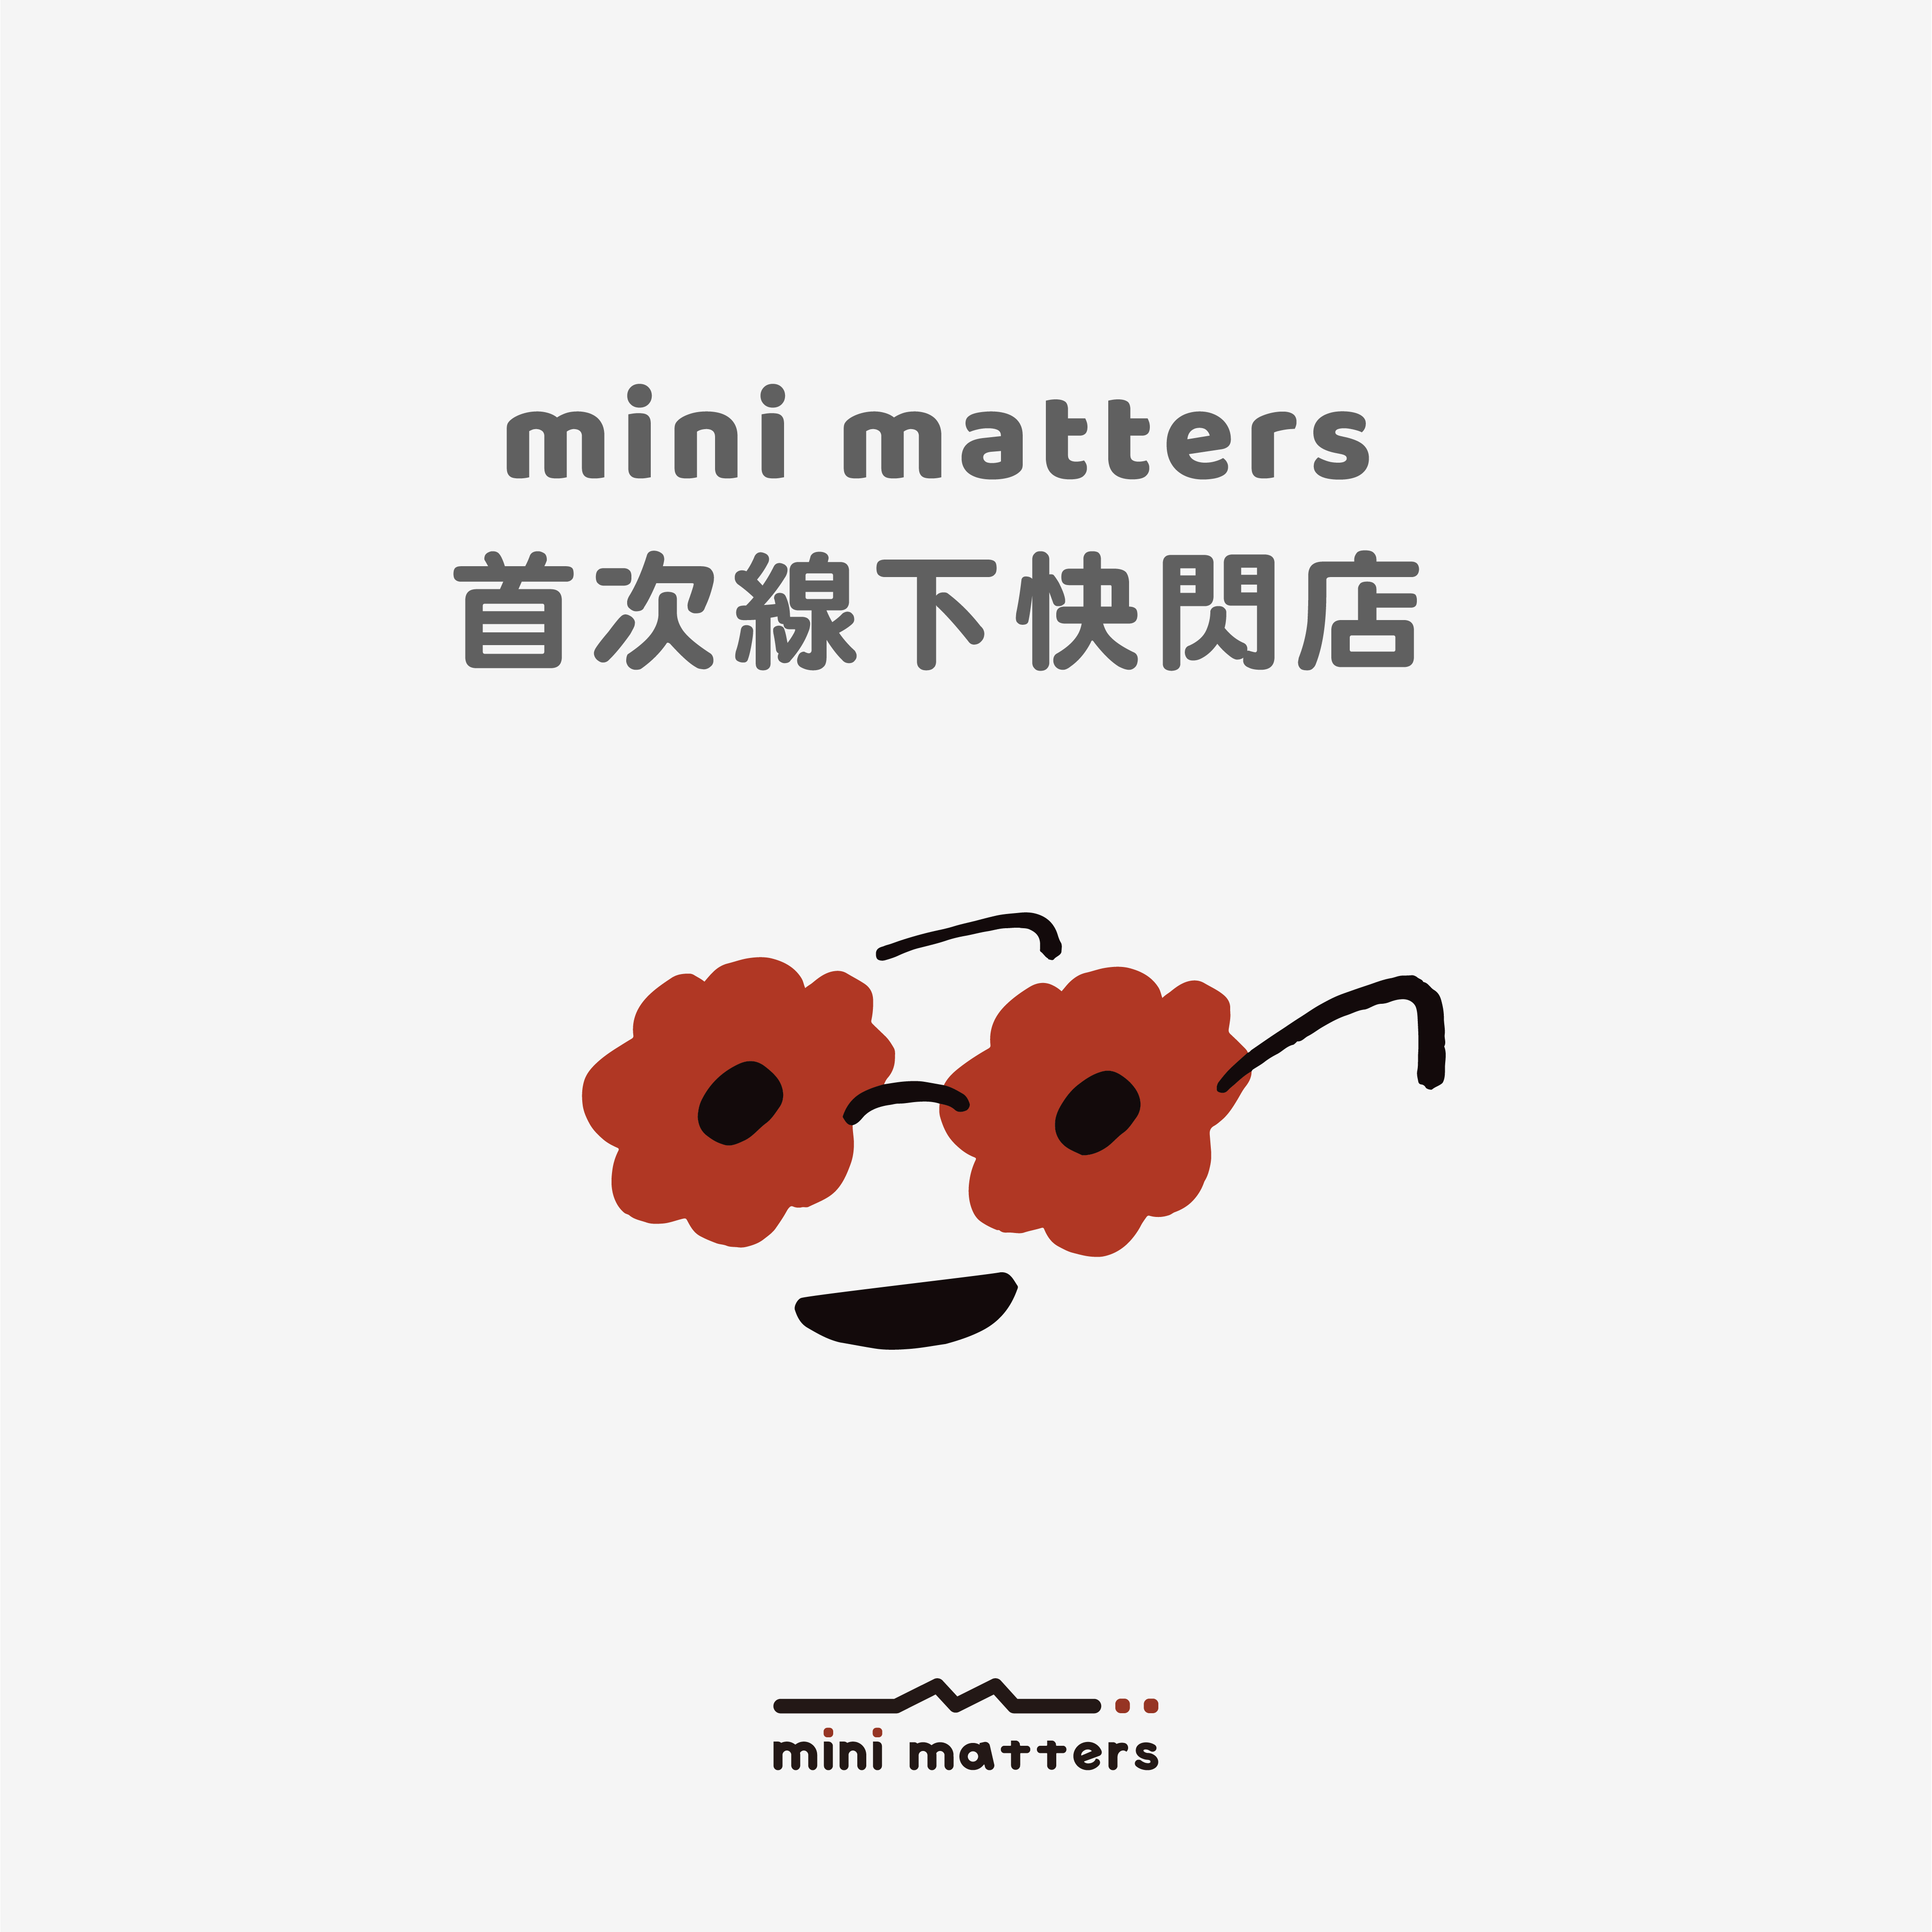 mini matters 首次線下快閃店